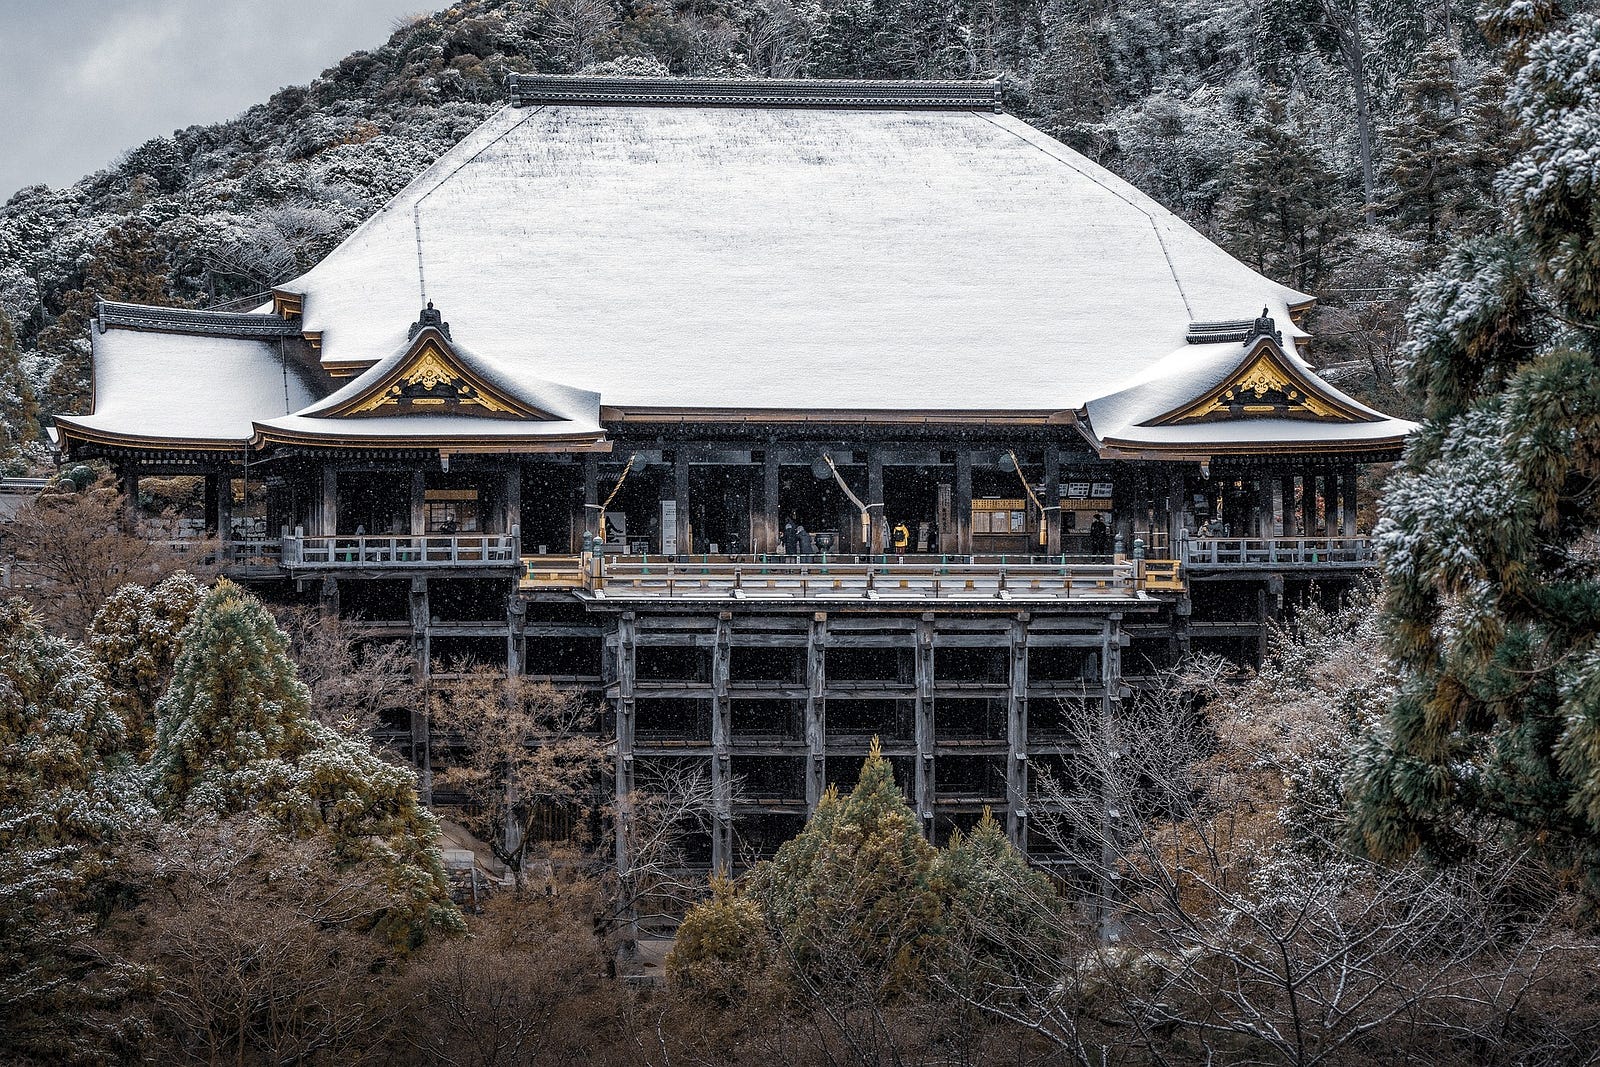 Takkoku Seikōji Temple is modeled after the Kiyomizu temple in Kyoto.